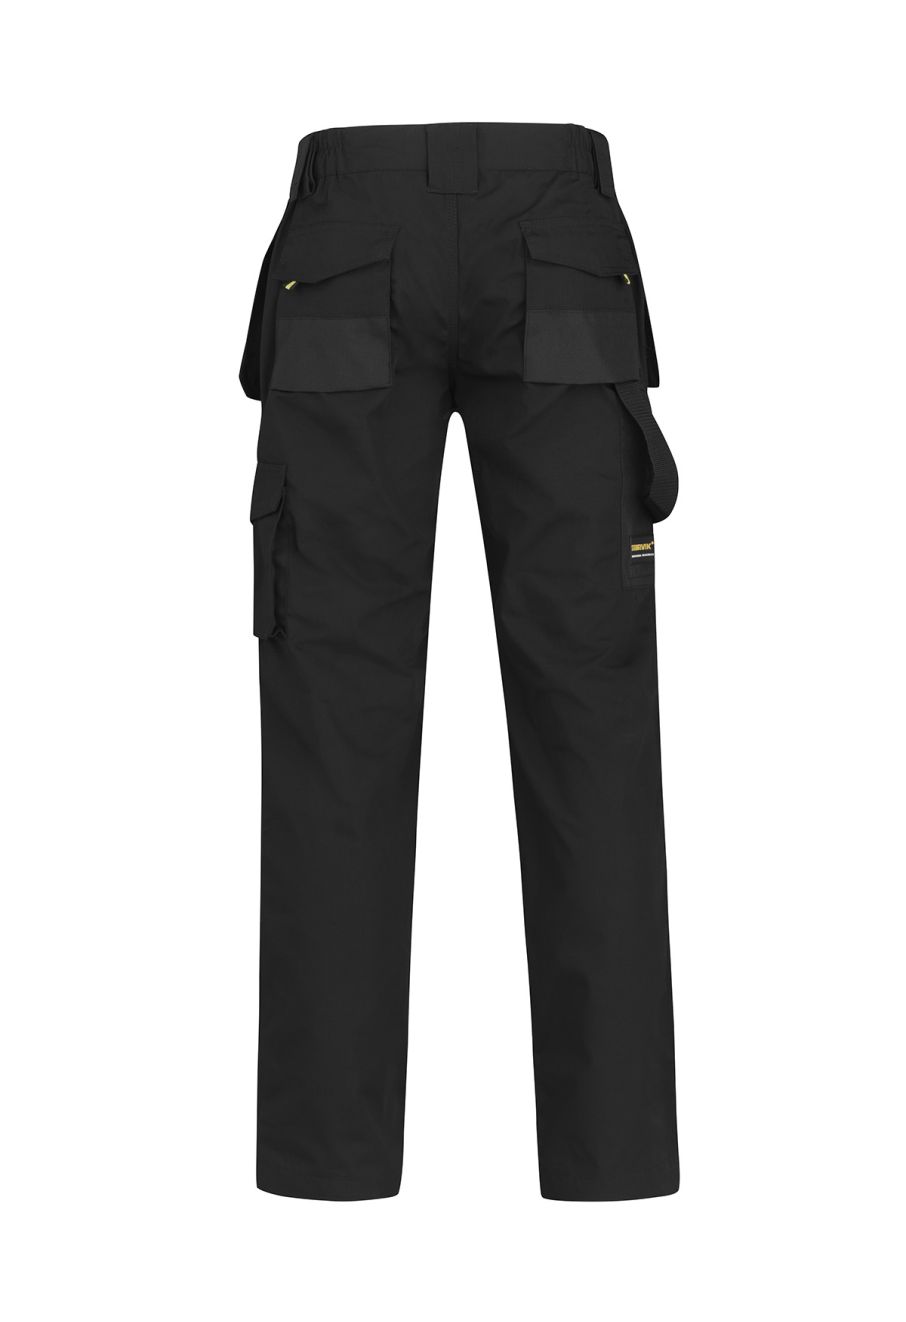 Iron Mountain Workwear Classic Cargo Trouser Mens | SportsDirect.com USA